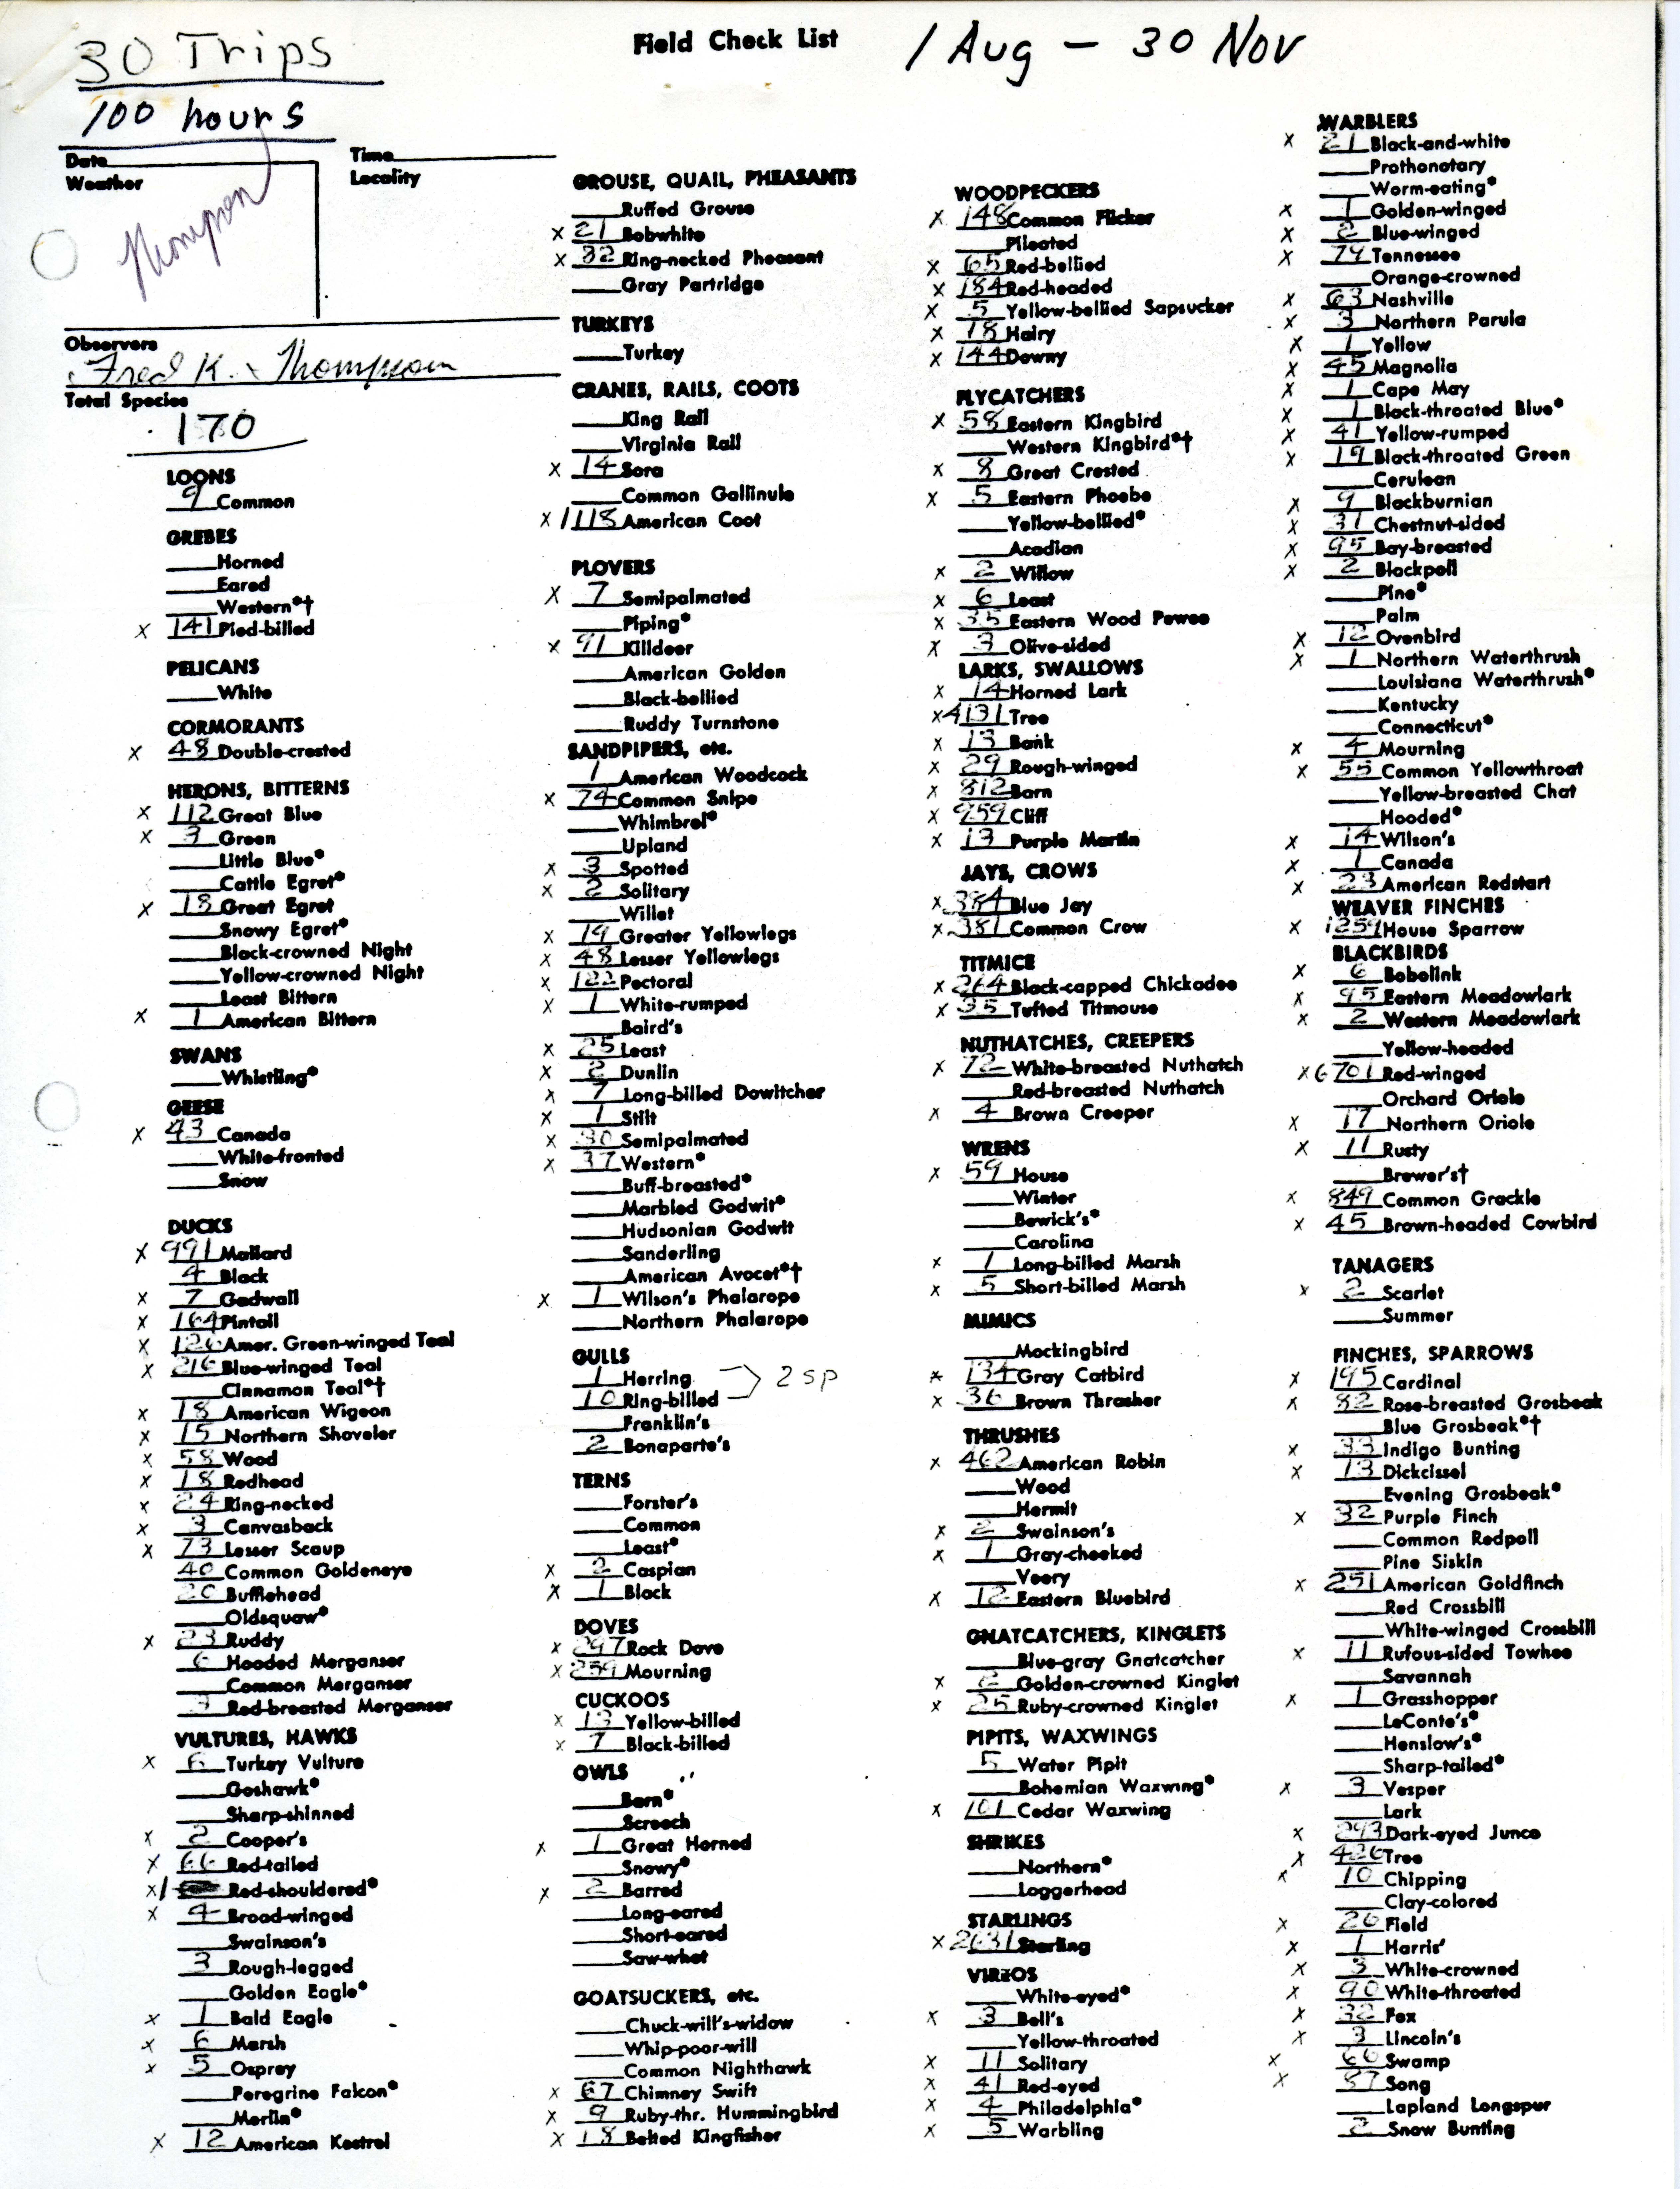 Field check list, August 1 - November 30, 1978